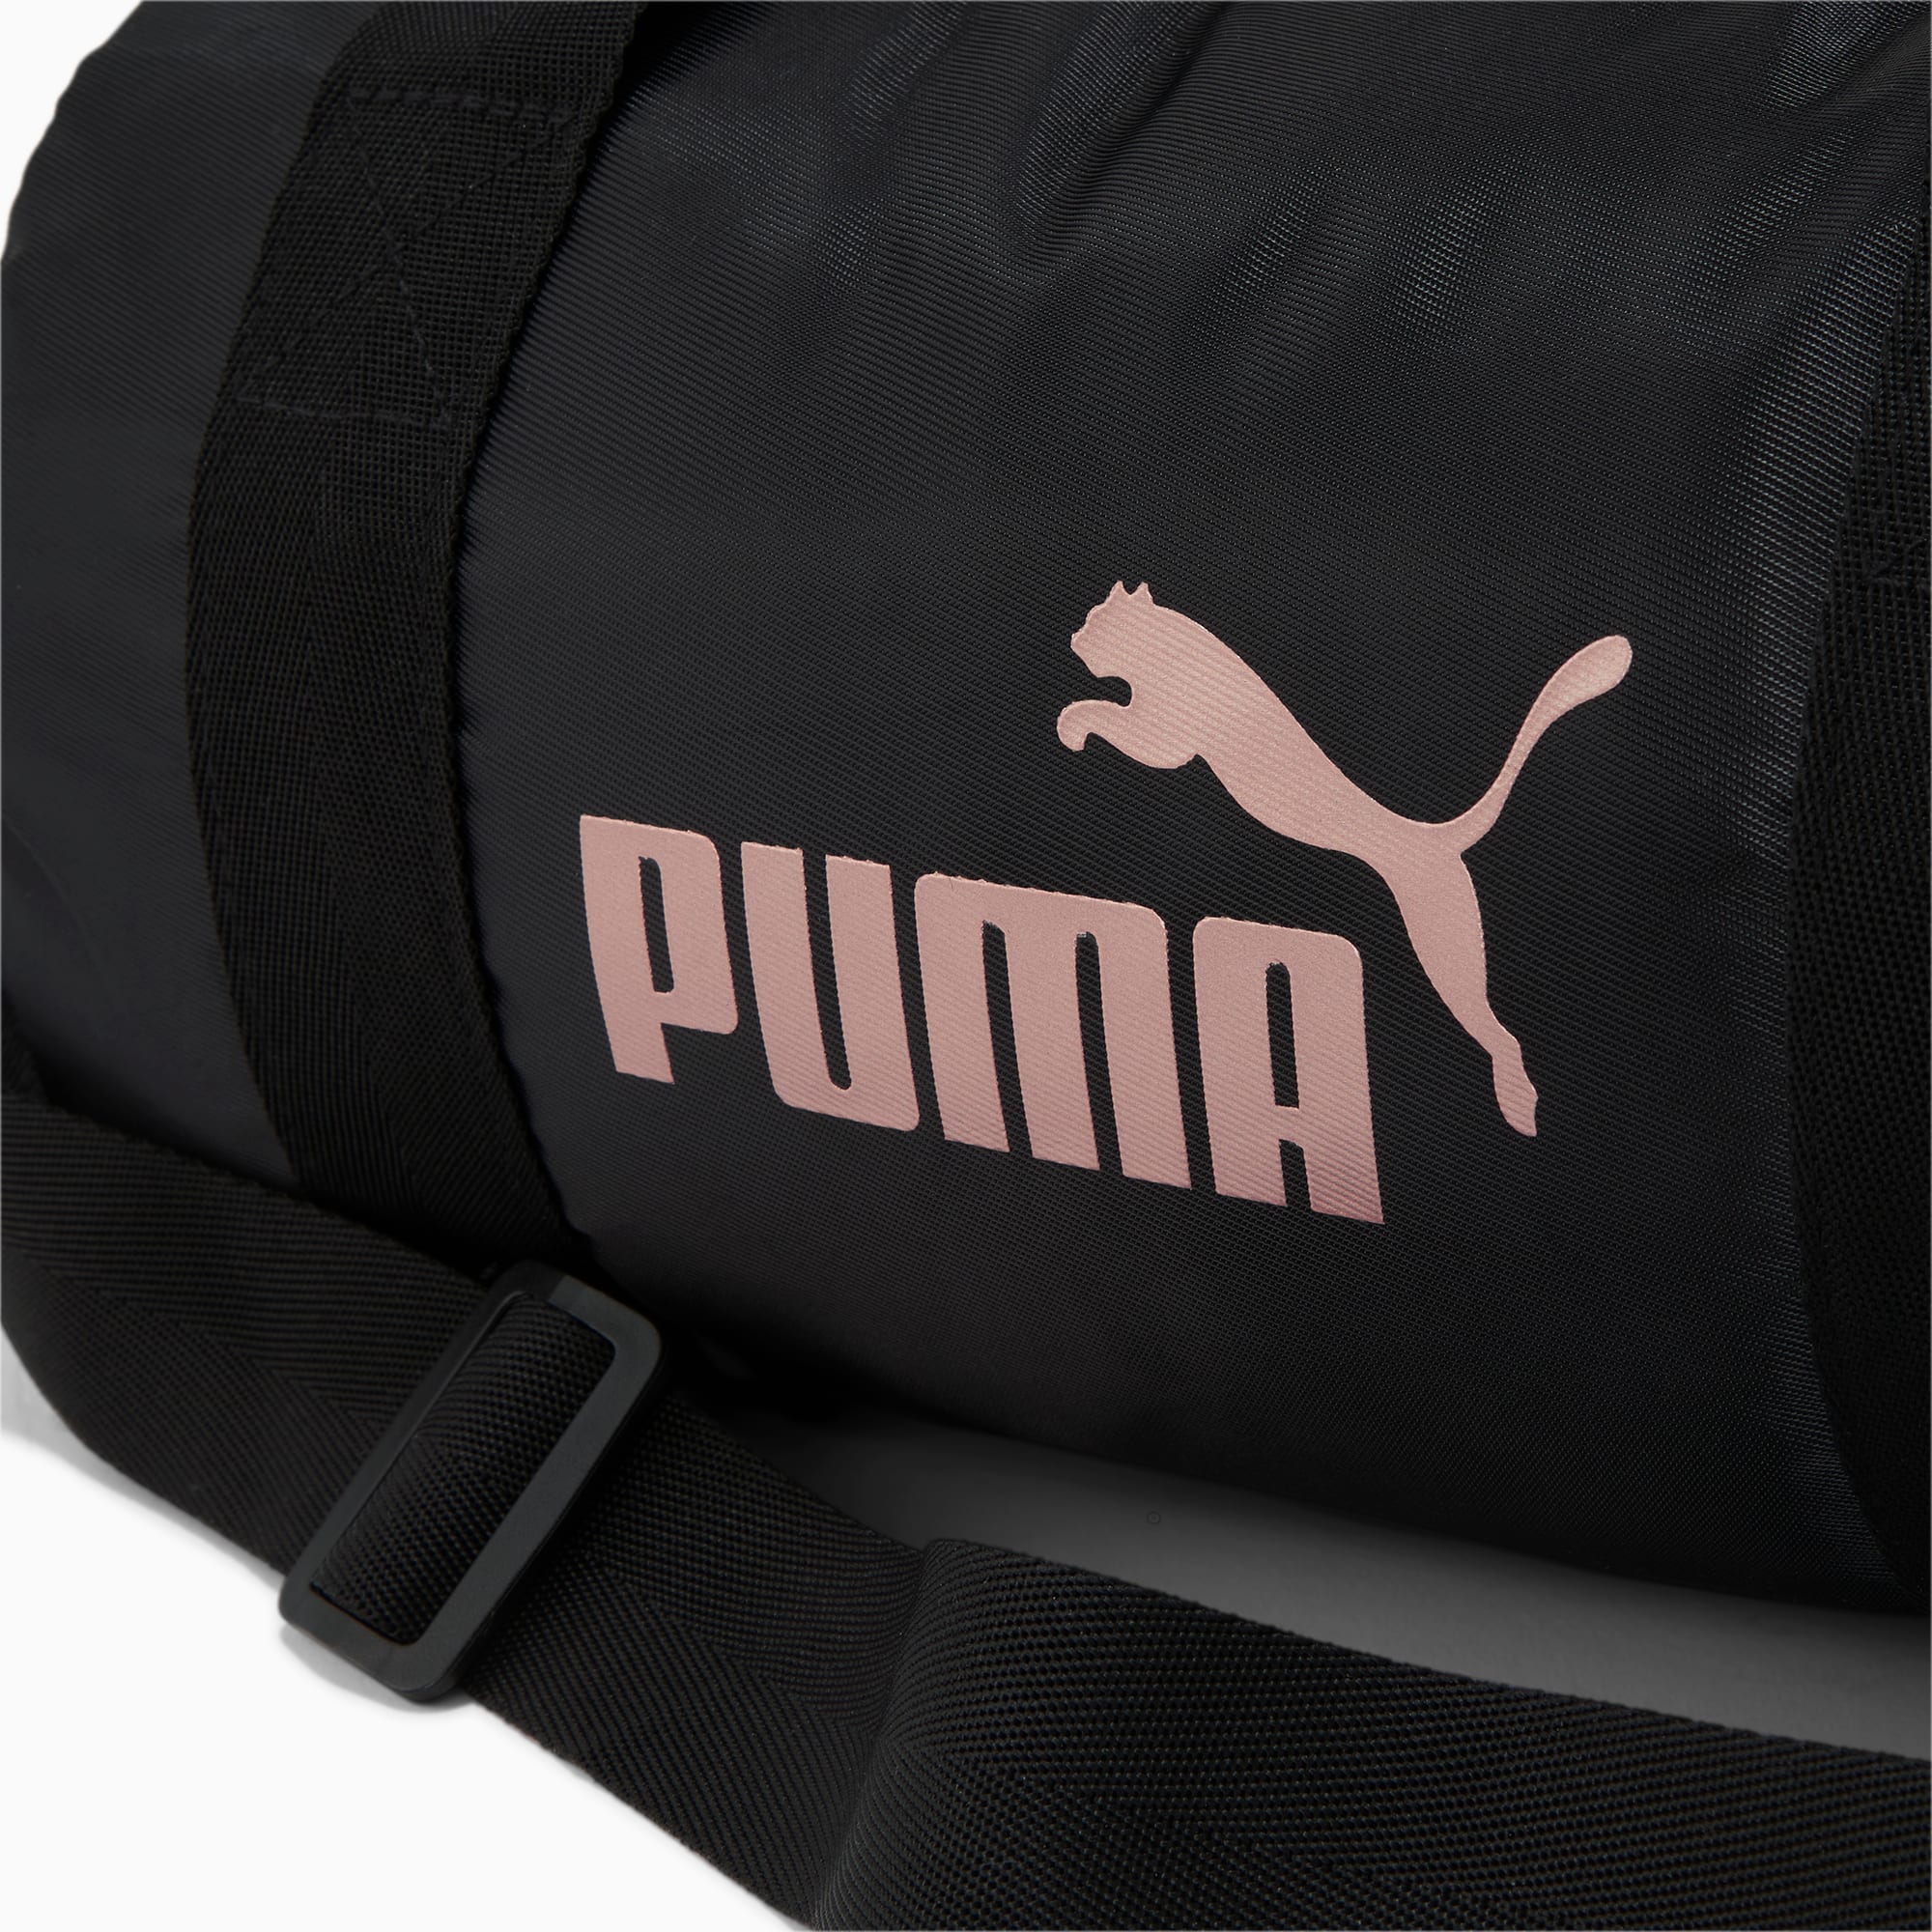 Puma 74897 01 Sac de Sport Mixte Adulte